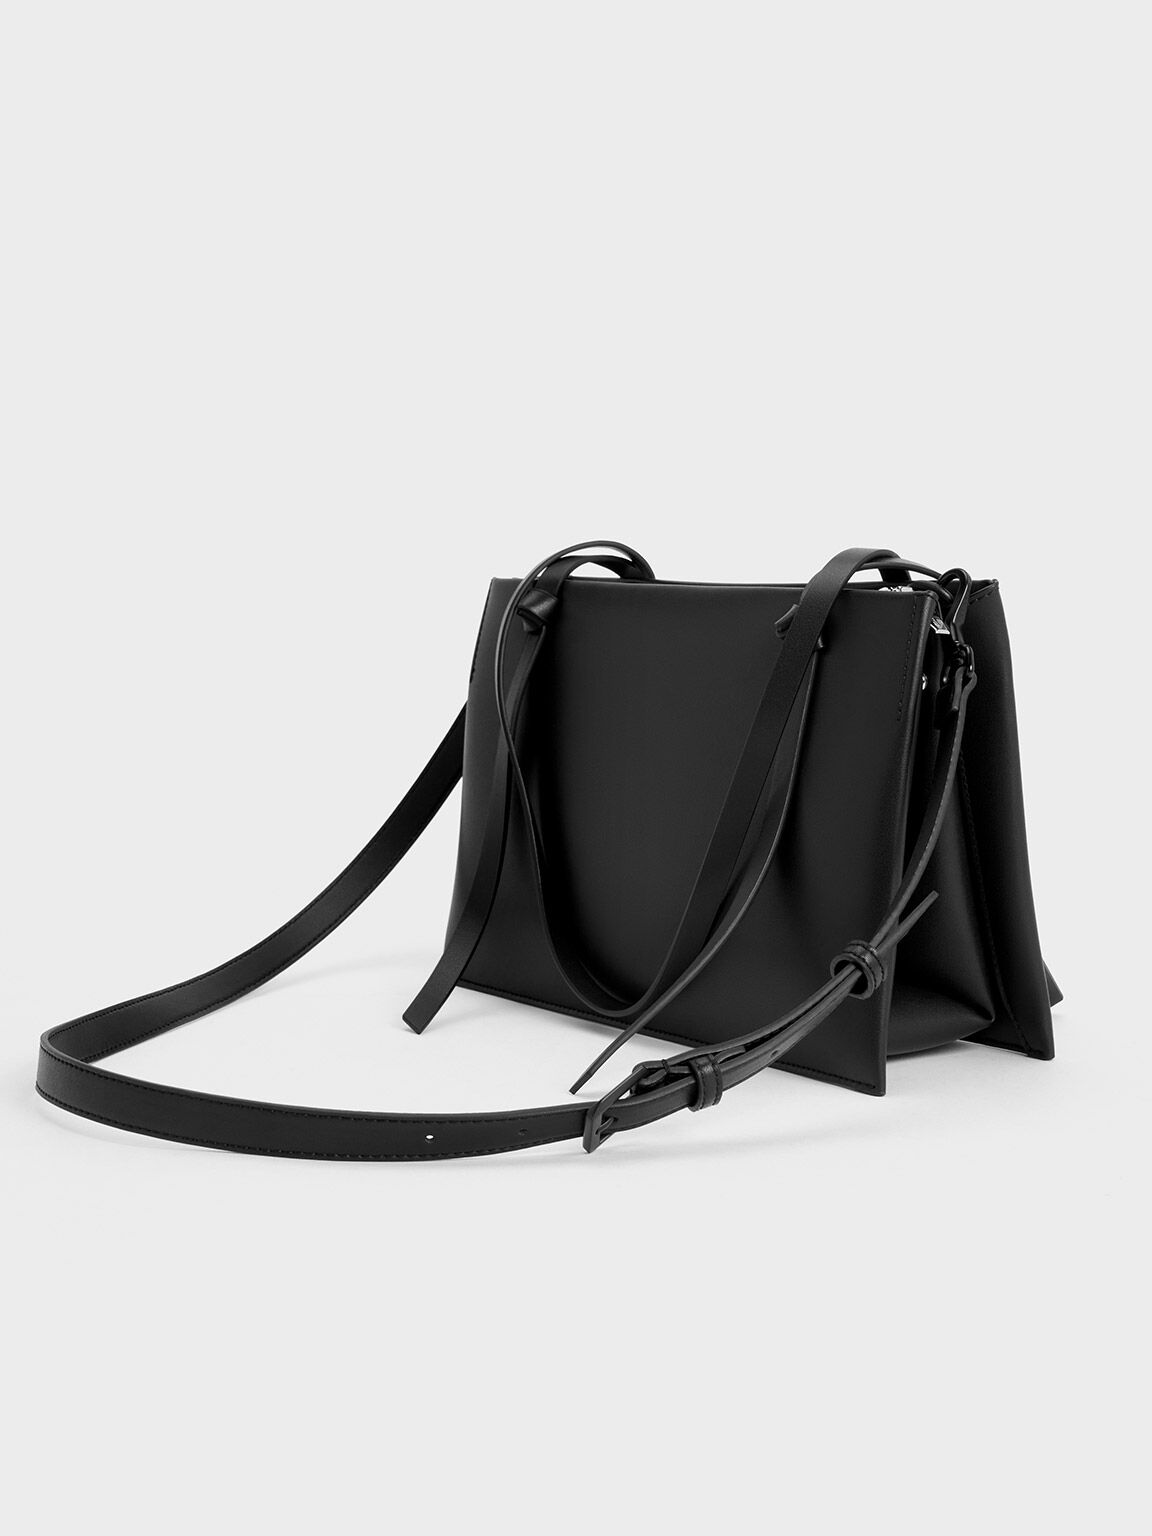 Midori Geometric Tote Bag - Noir